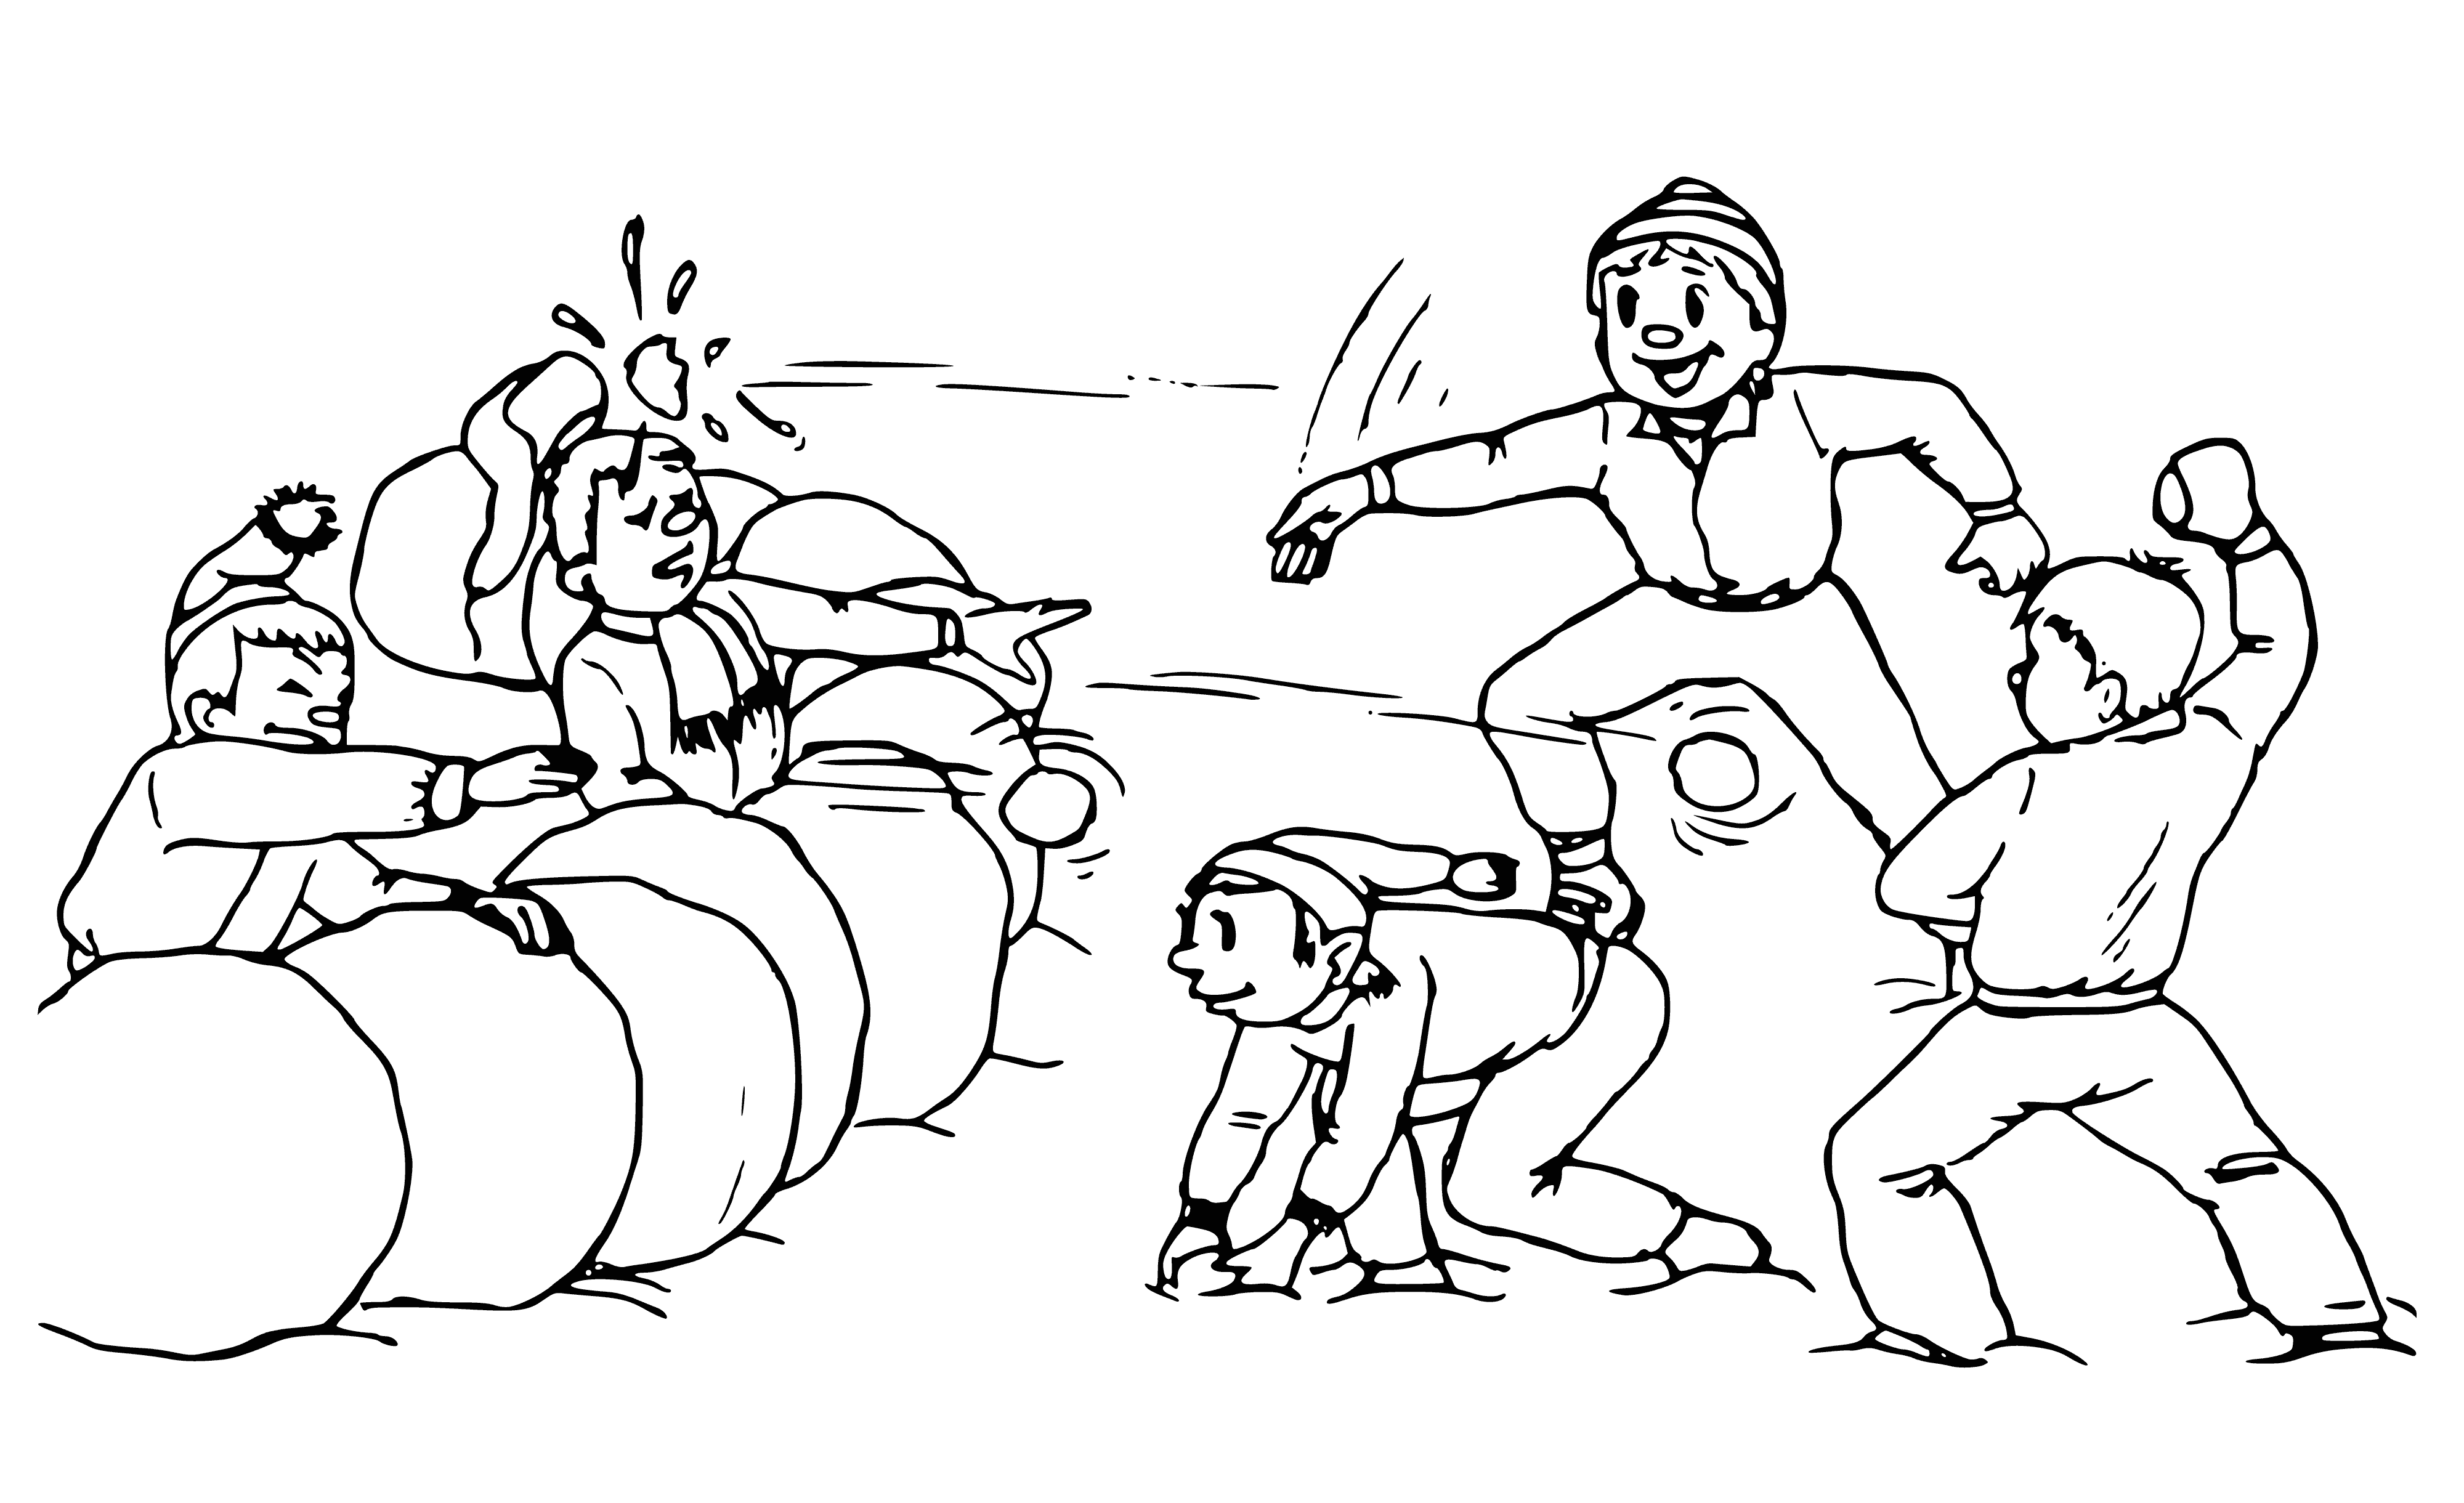 coloring page: Three kids playing in a winter wonderland, throwing snowballs & having fun!